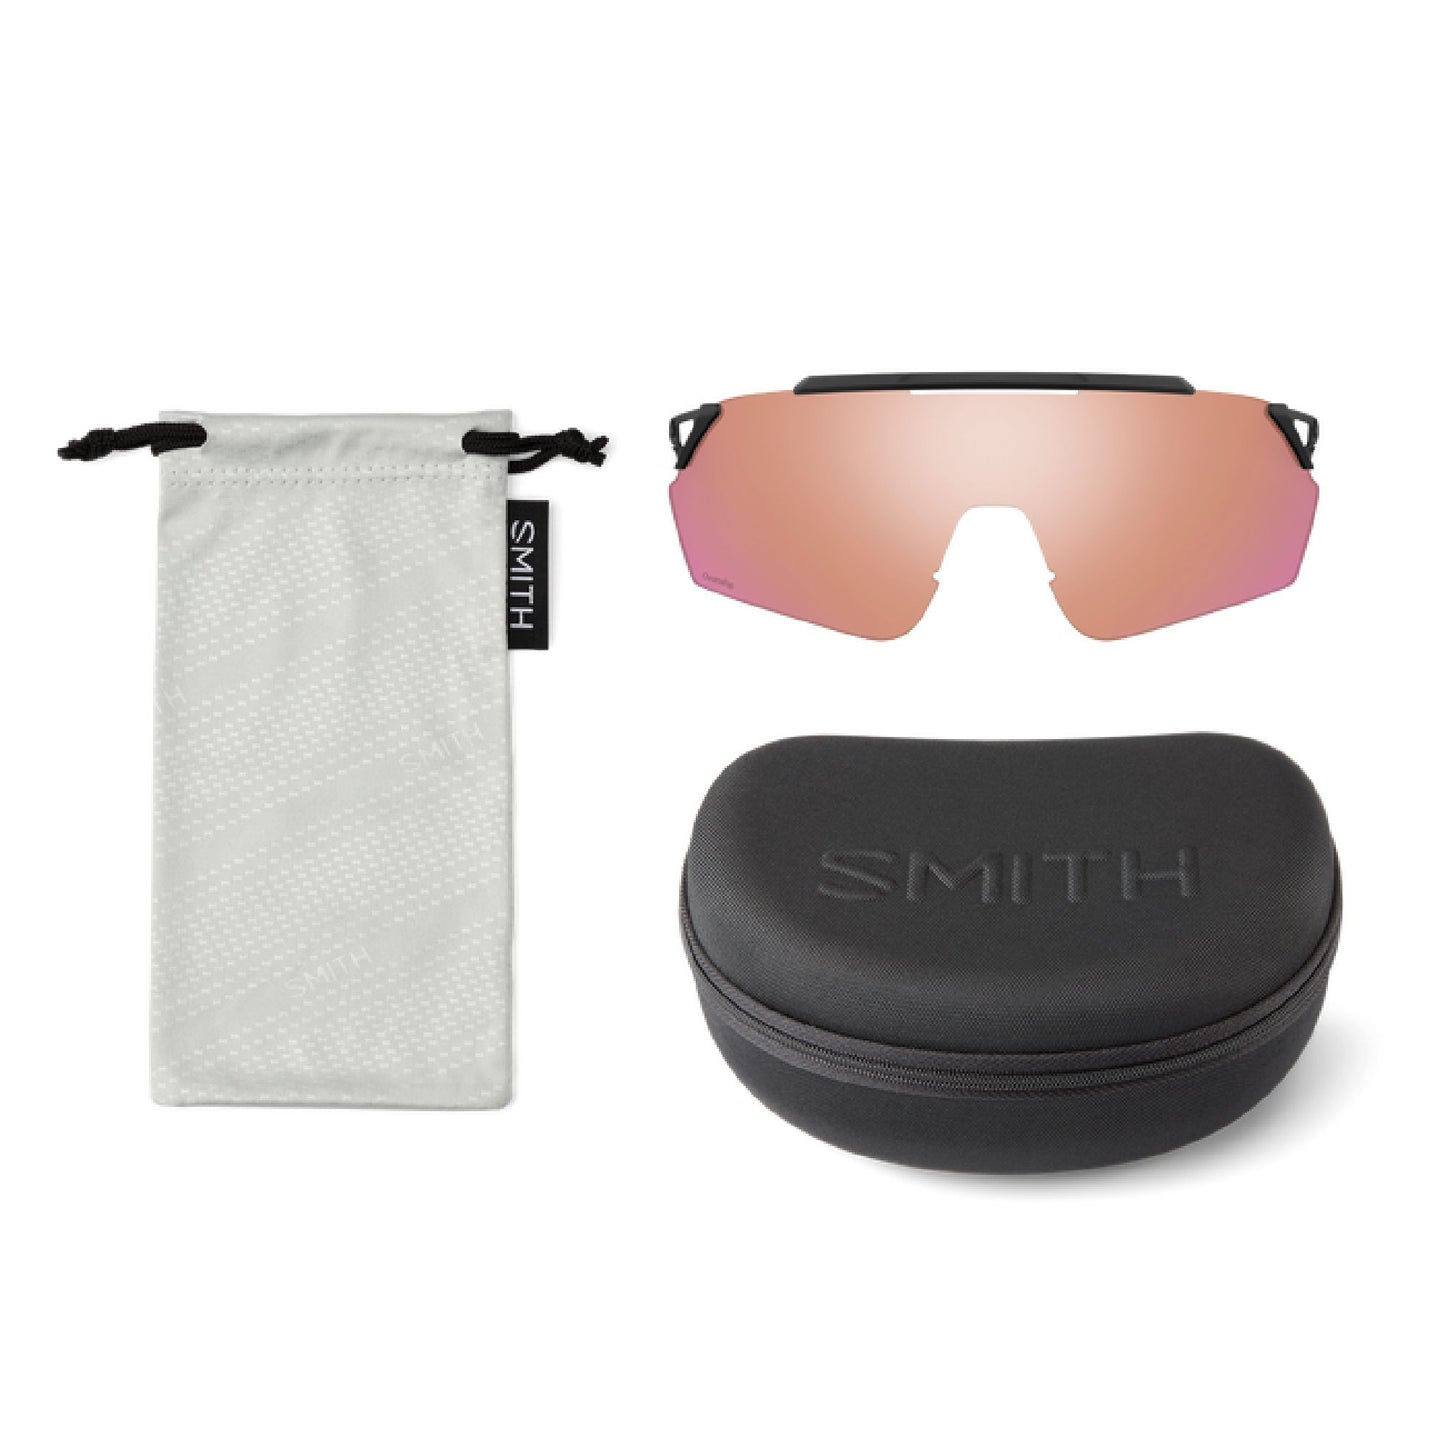 Smith Ruckus Sunglasses Matte Black ChromaPop Opal Mirror Sunglasses